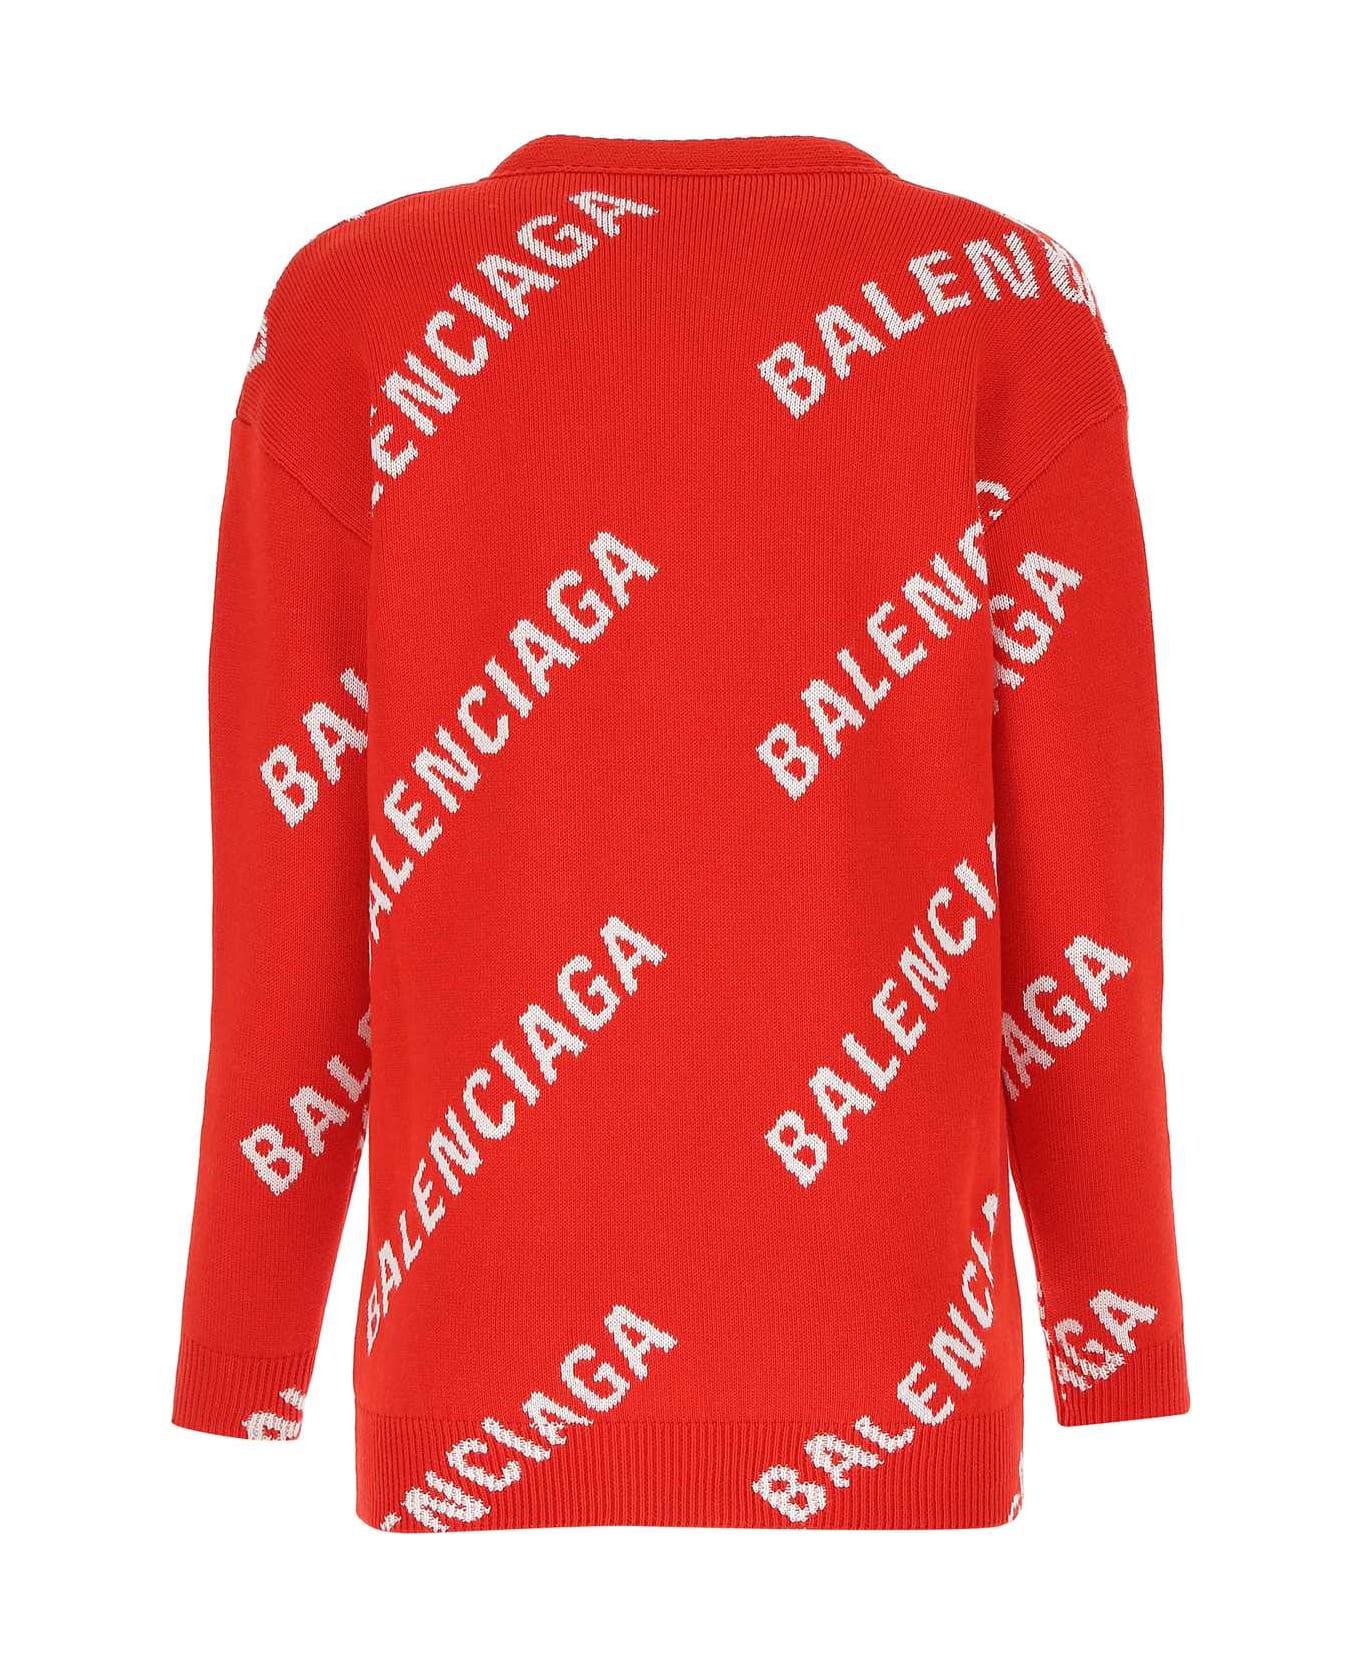 Balenciaga Embroidered Stretch Cotton Blend Oversize Cardigan - REDWHITE カーディガン